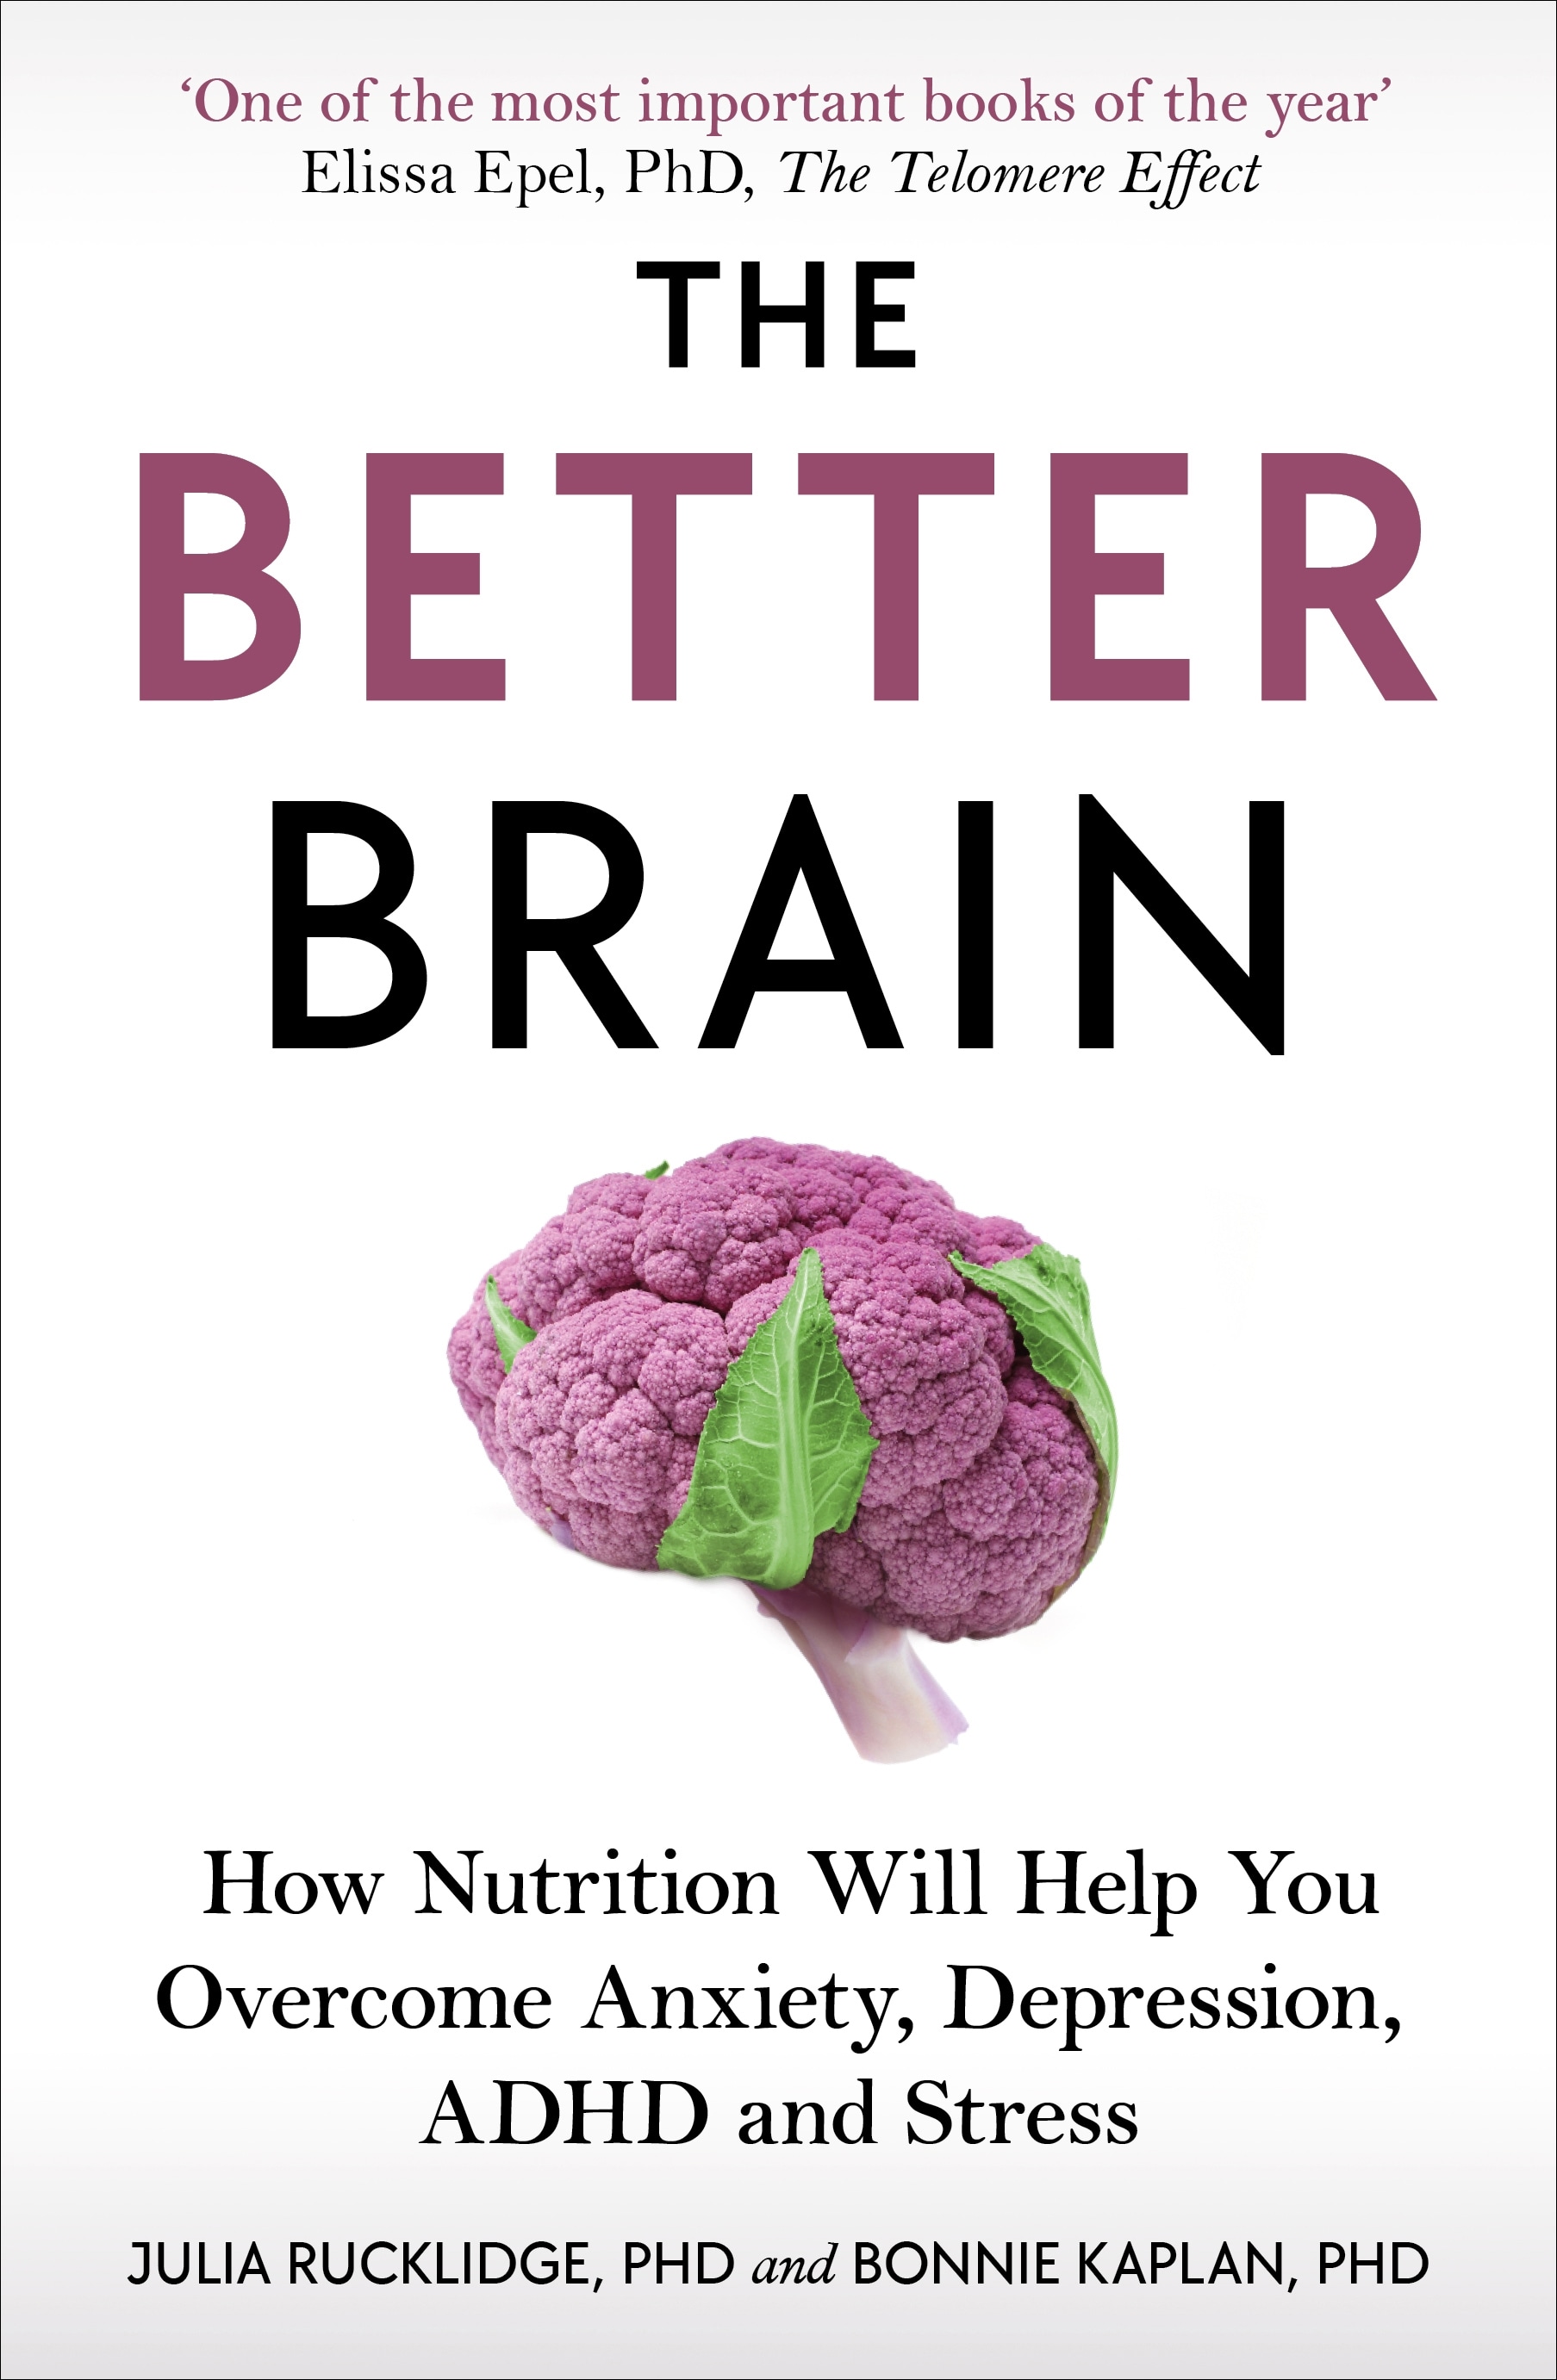 Book “The Better Brain” by Julia J Rucklidge, Bonnie J Kaplan — April 20, 2021